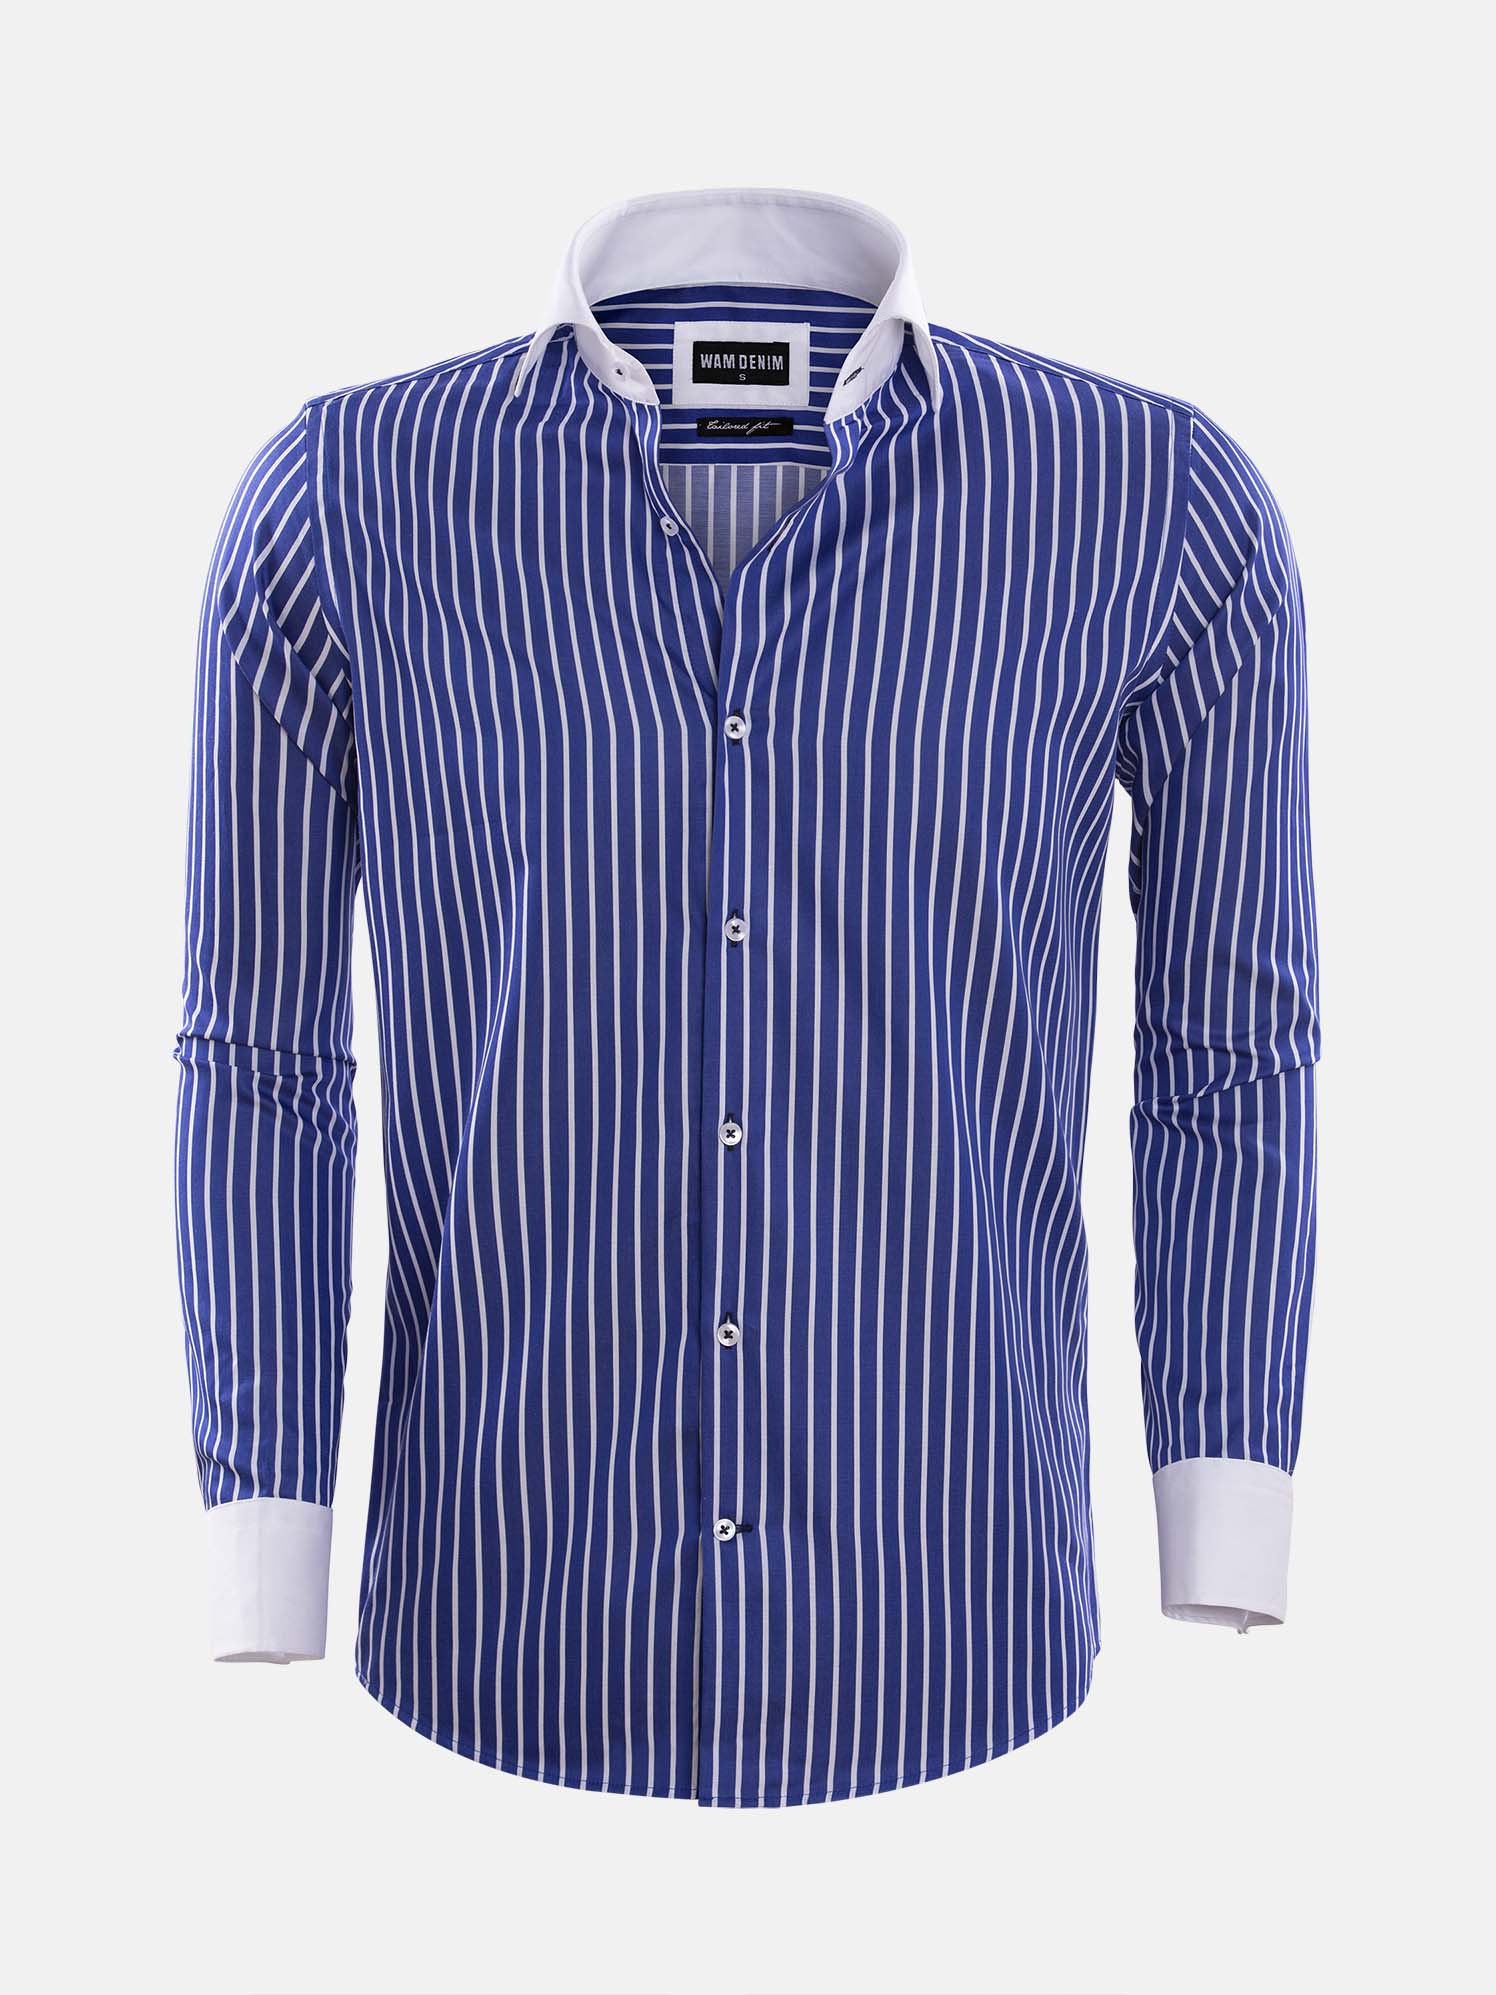 WAM Denim Overhemd Lange Mouw Teramo 75570 Royal Blue-